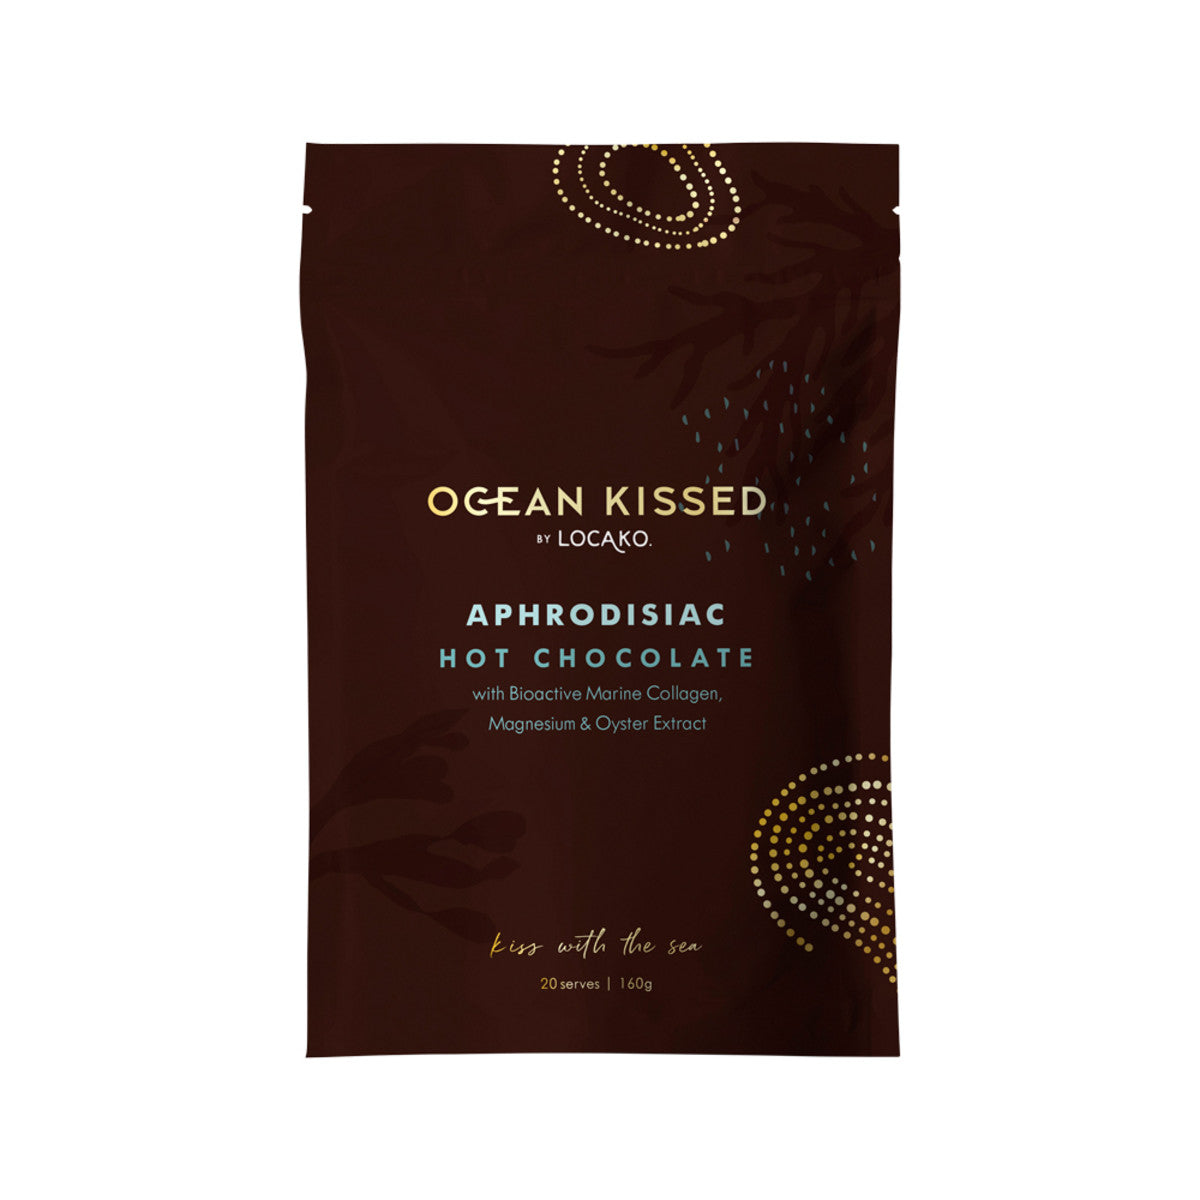 Ocean Kissed Hot Chocolate Aphrodisiac 160g